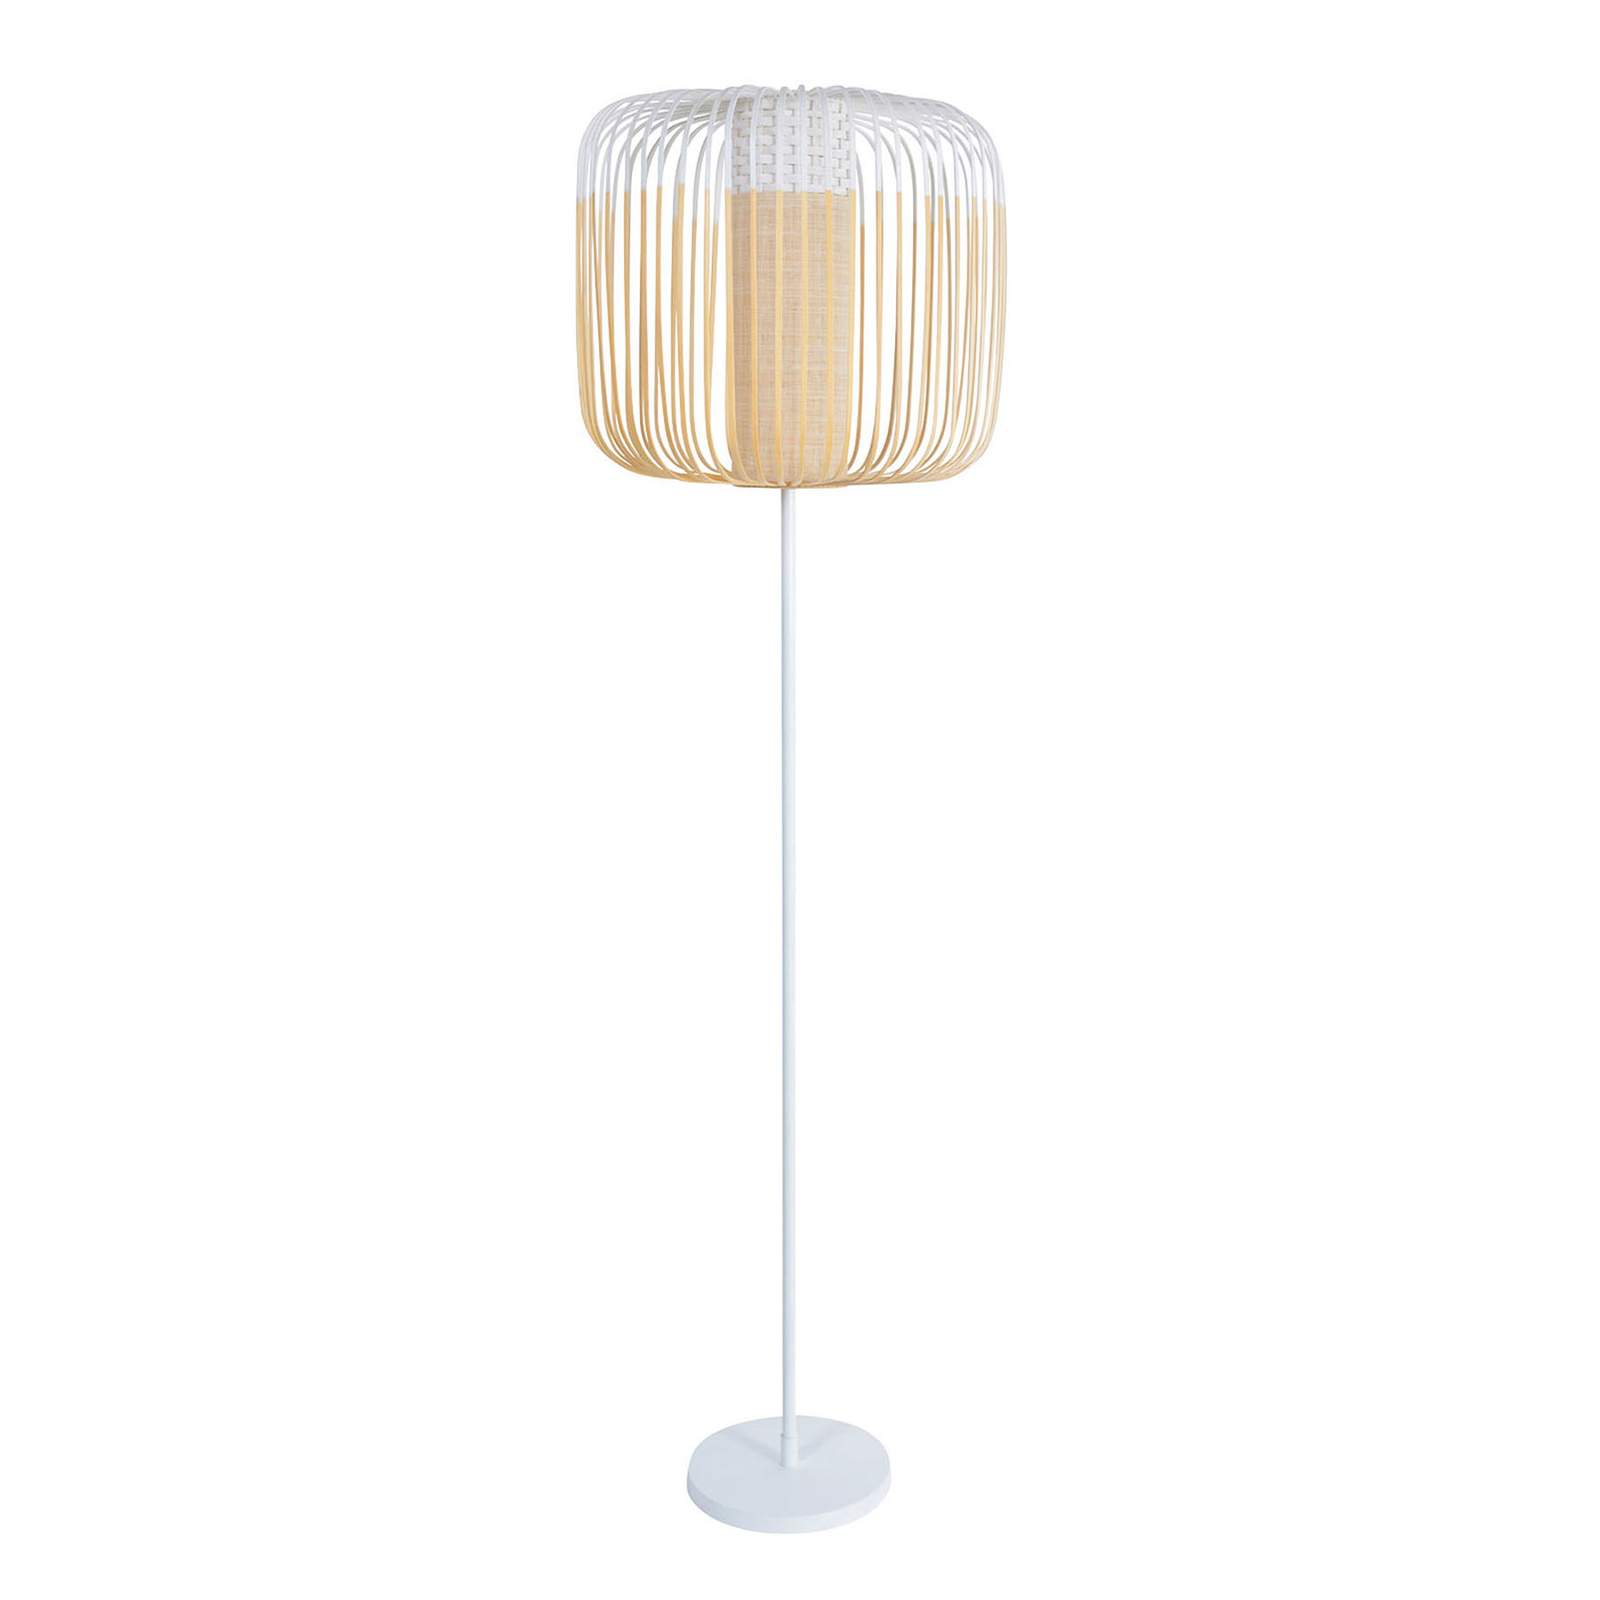 Forestier Bamboo Light gulvlampe, 1 lyskilde, hvit